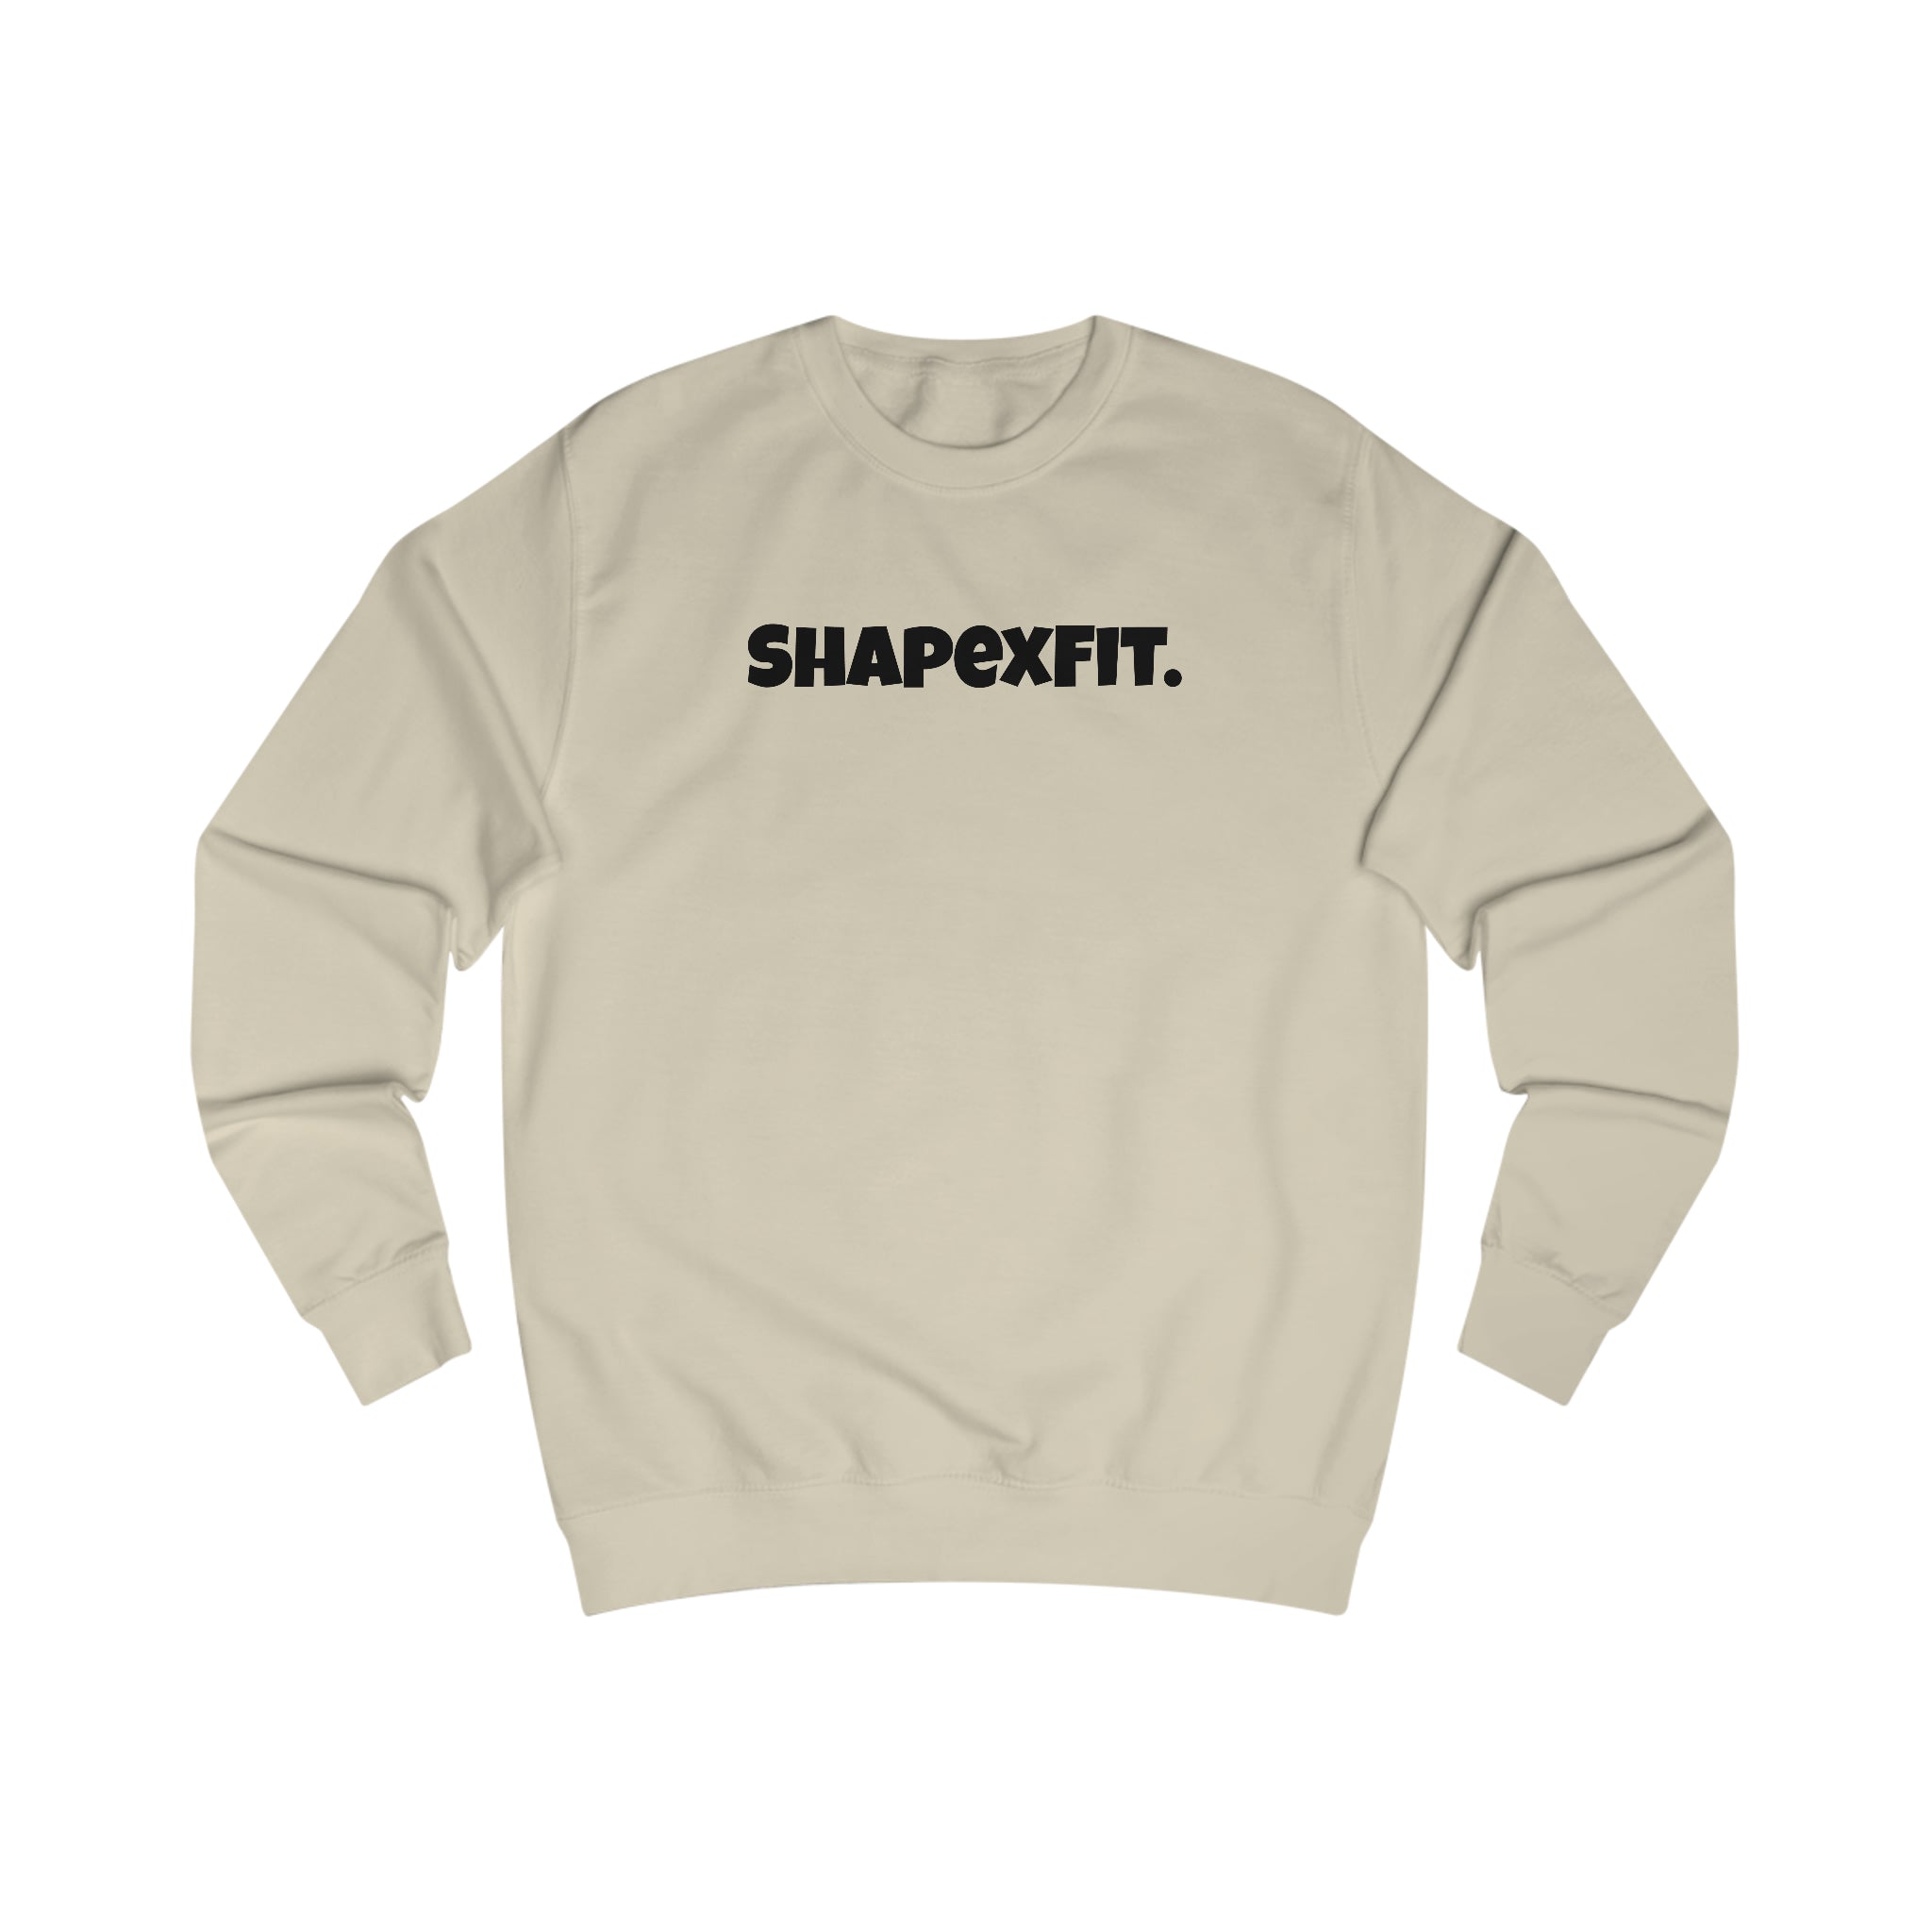 ShapexFit. Sweatshirt